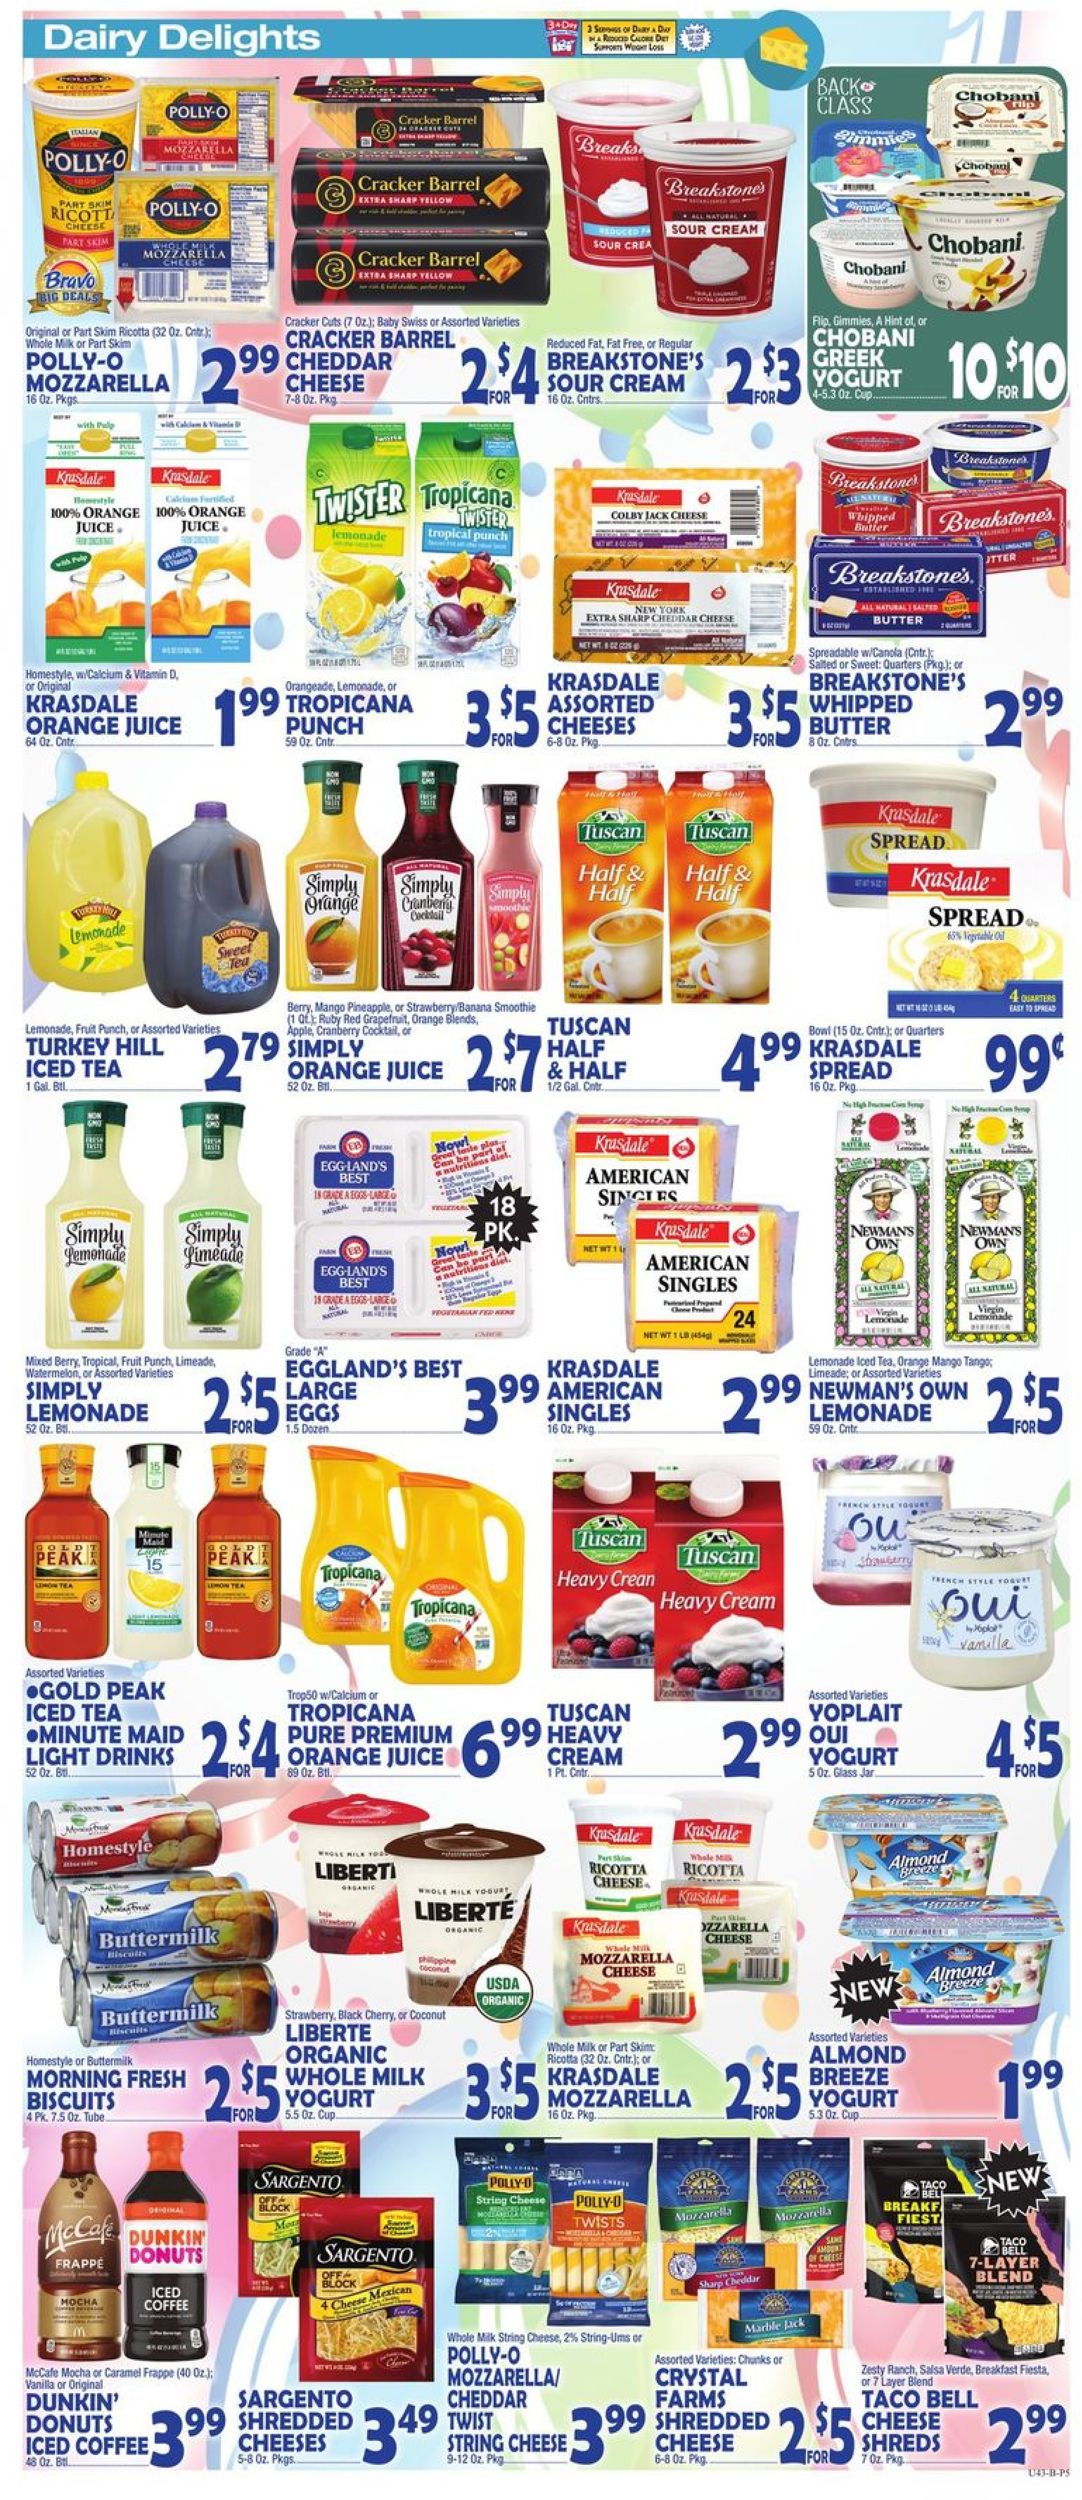 Catalogue Bravo Supermarkets from 08/30/2019